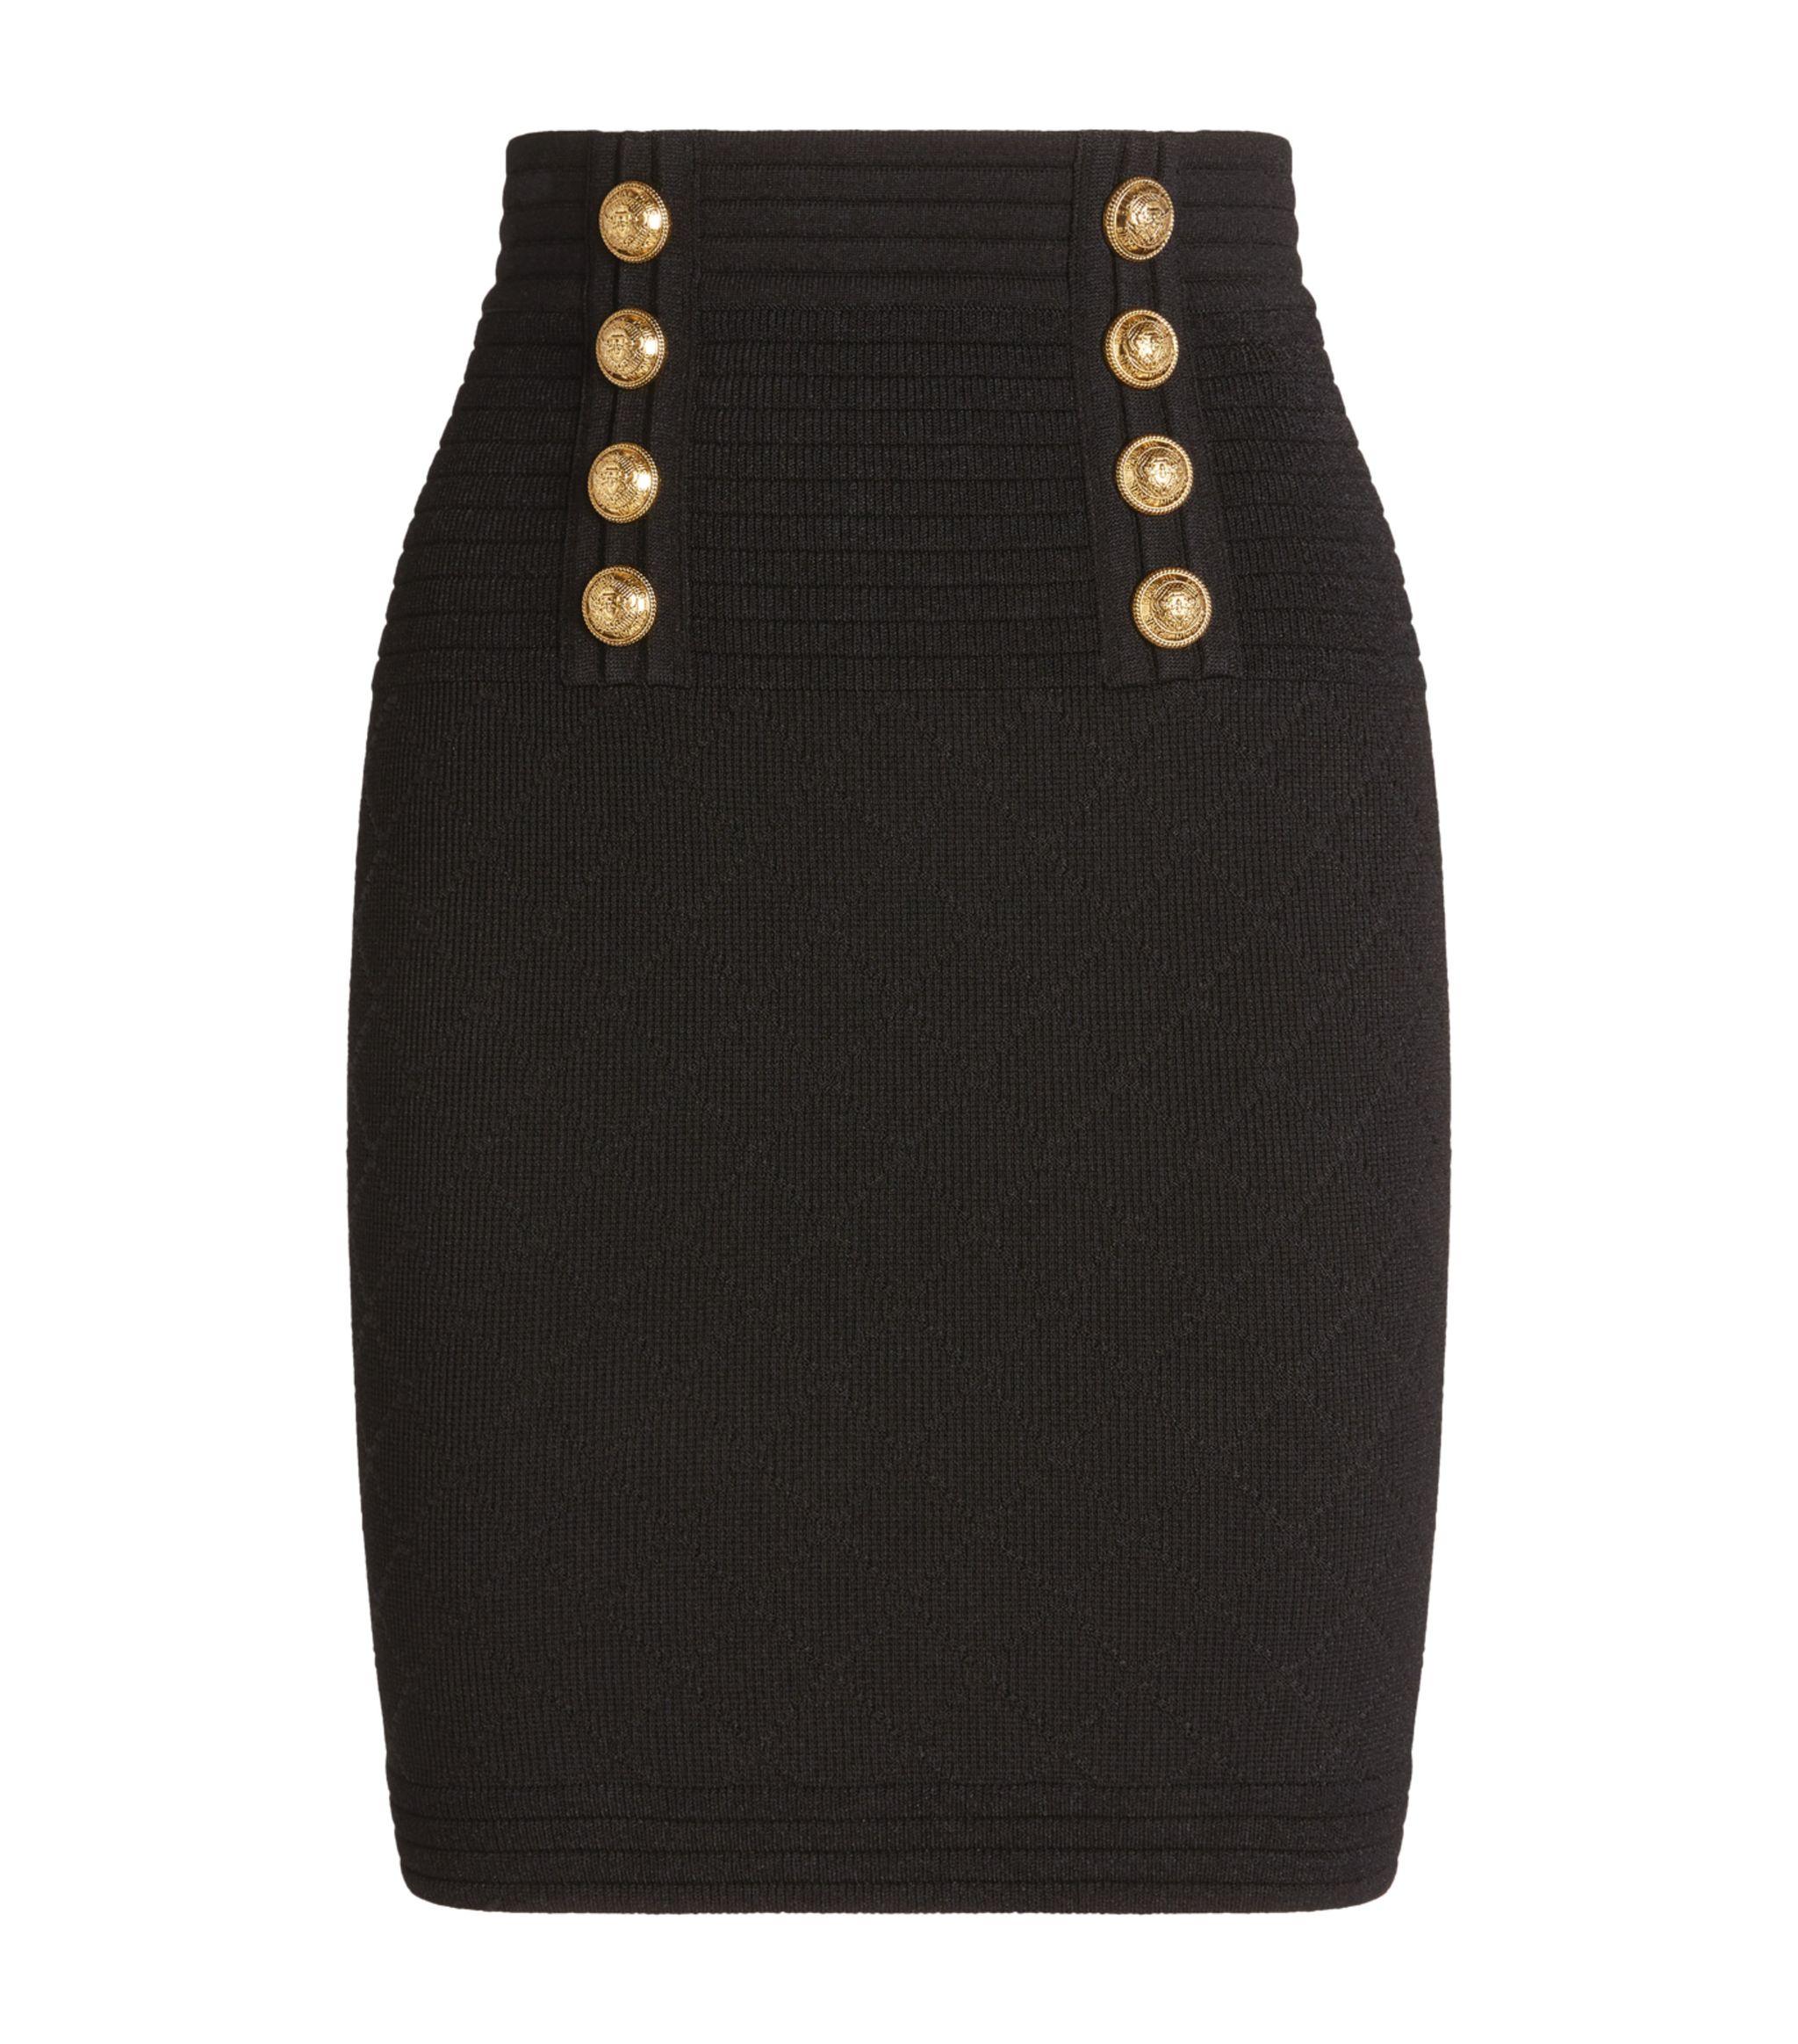 Balmain Synthetic Diamond-knit Skirt in Black - Lyst